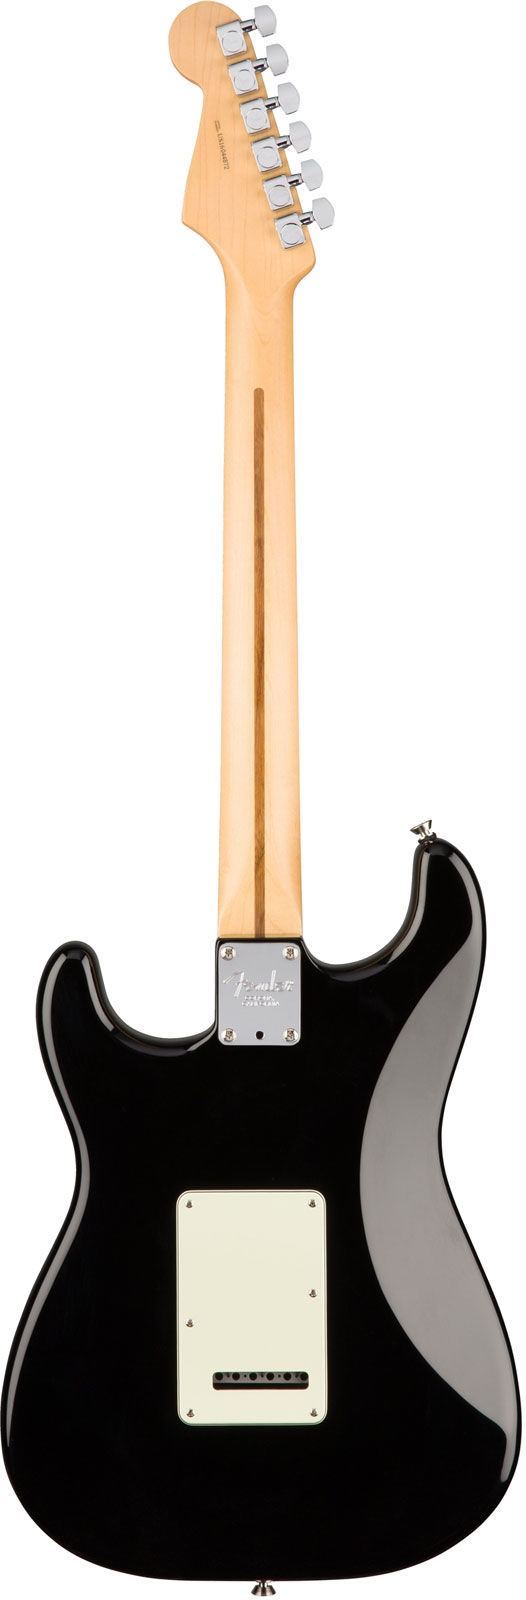 Fender Strat American Professional 2017 3s Usa Mn - Black - E-Gitarre in Str-Form - Variation 2